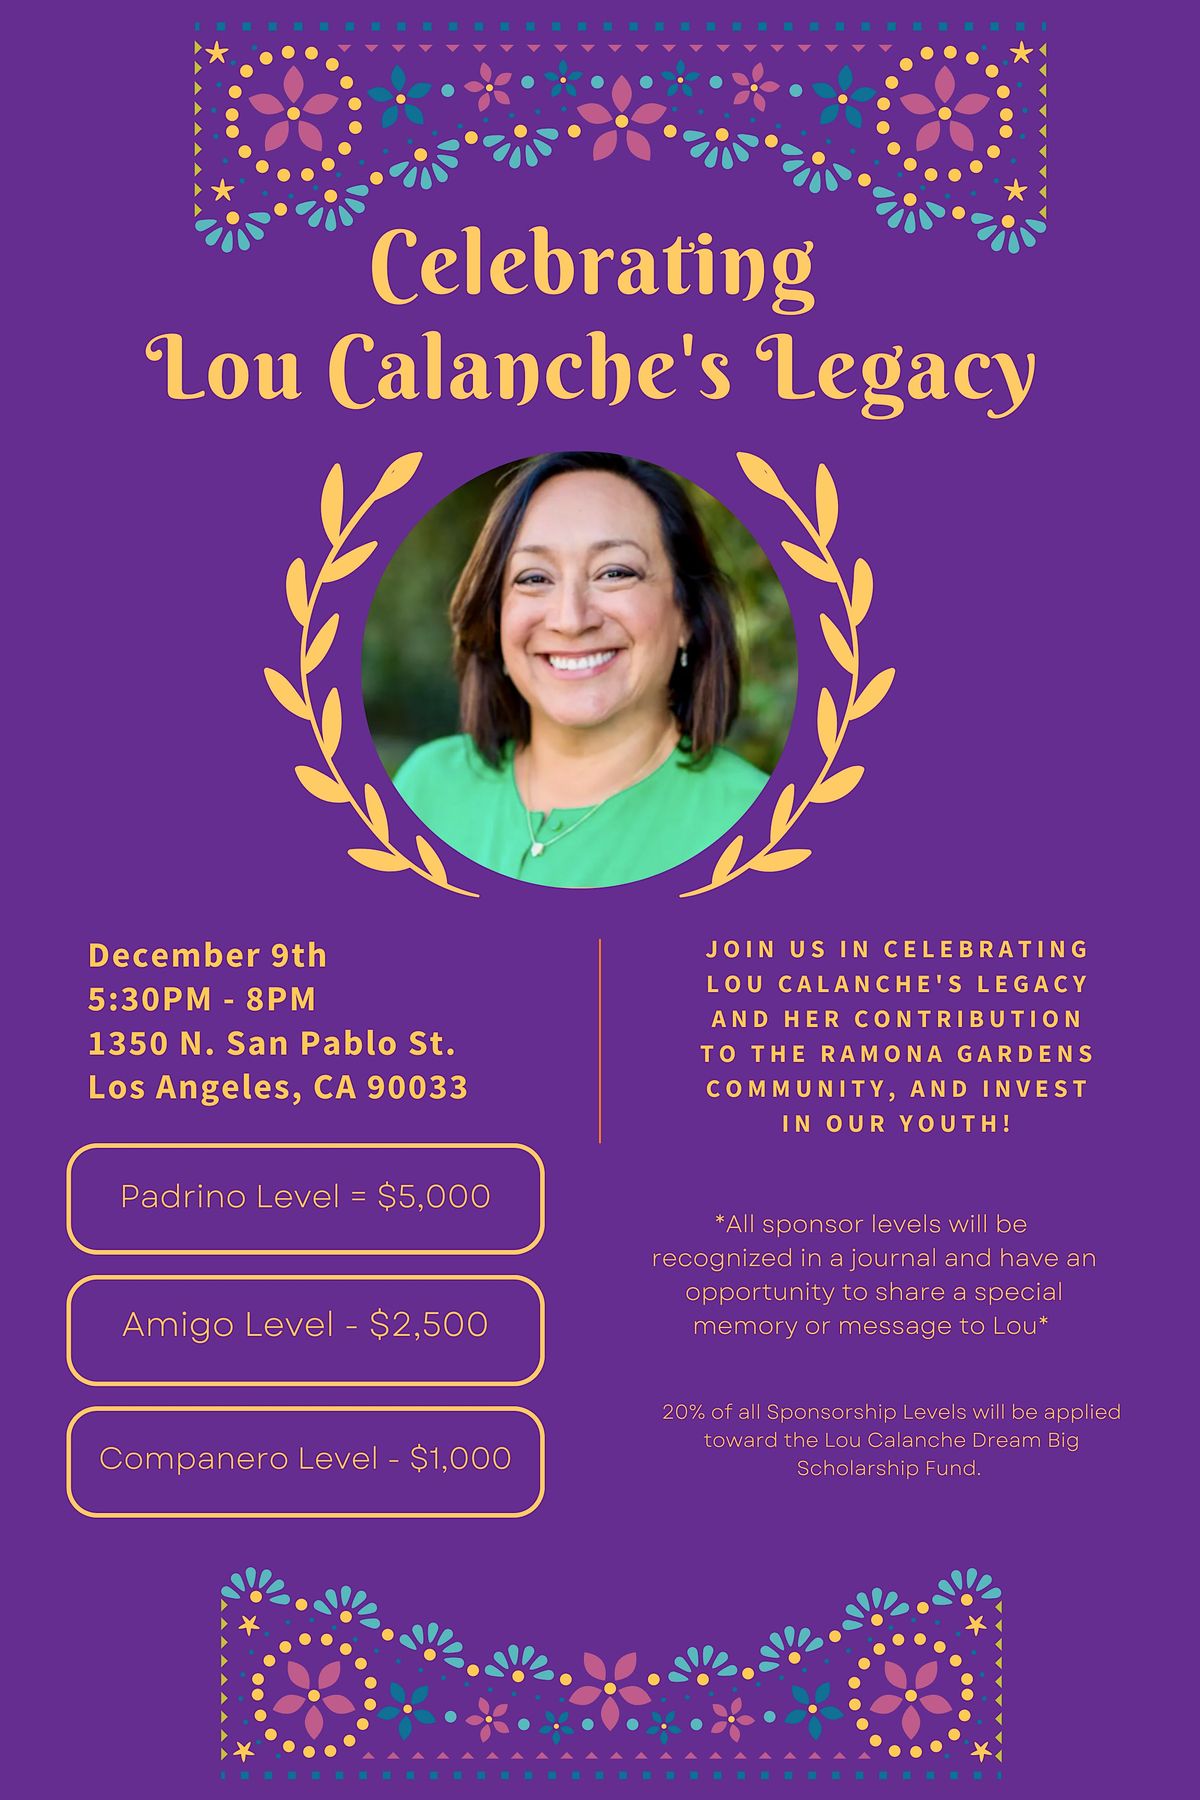 Celebration of Lou Calanche's Legacy